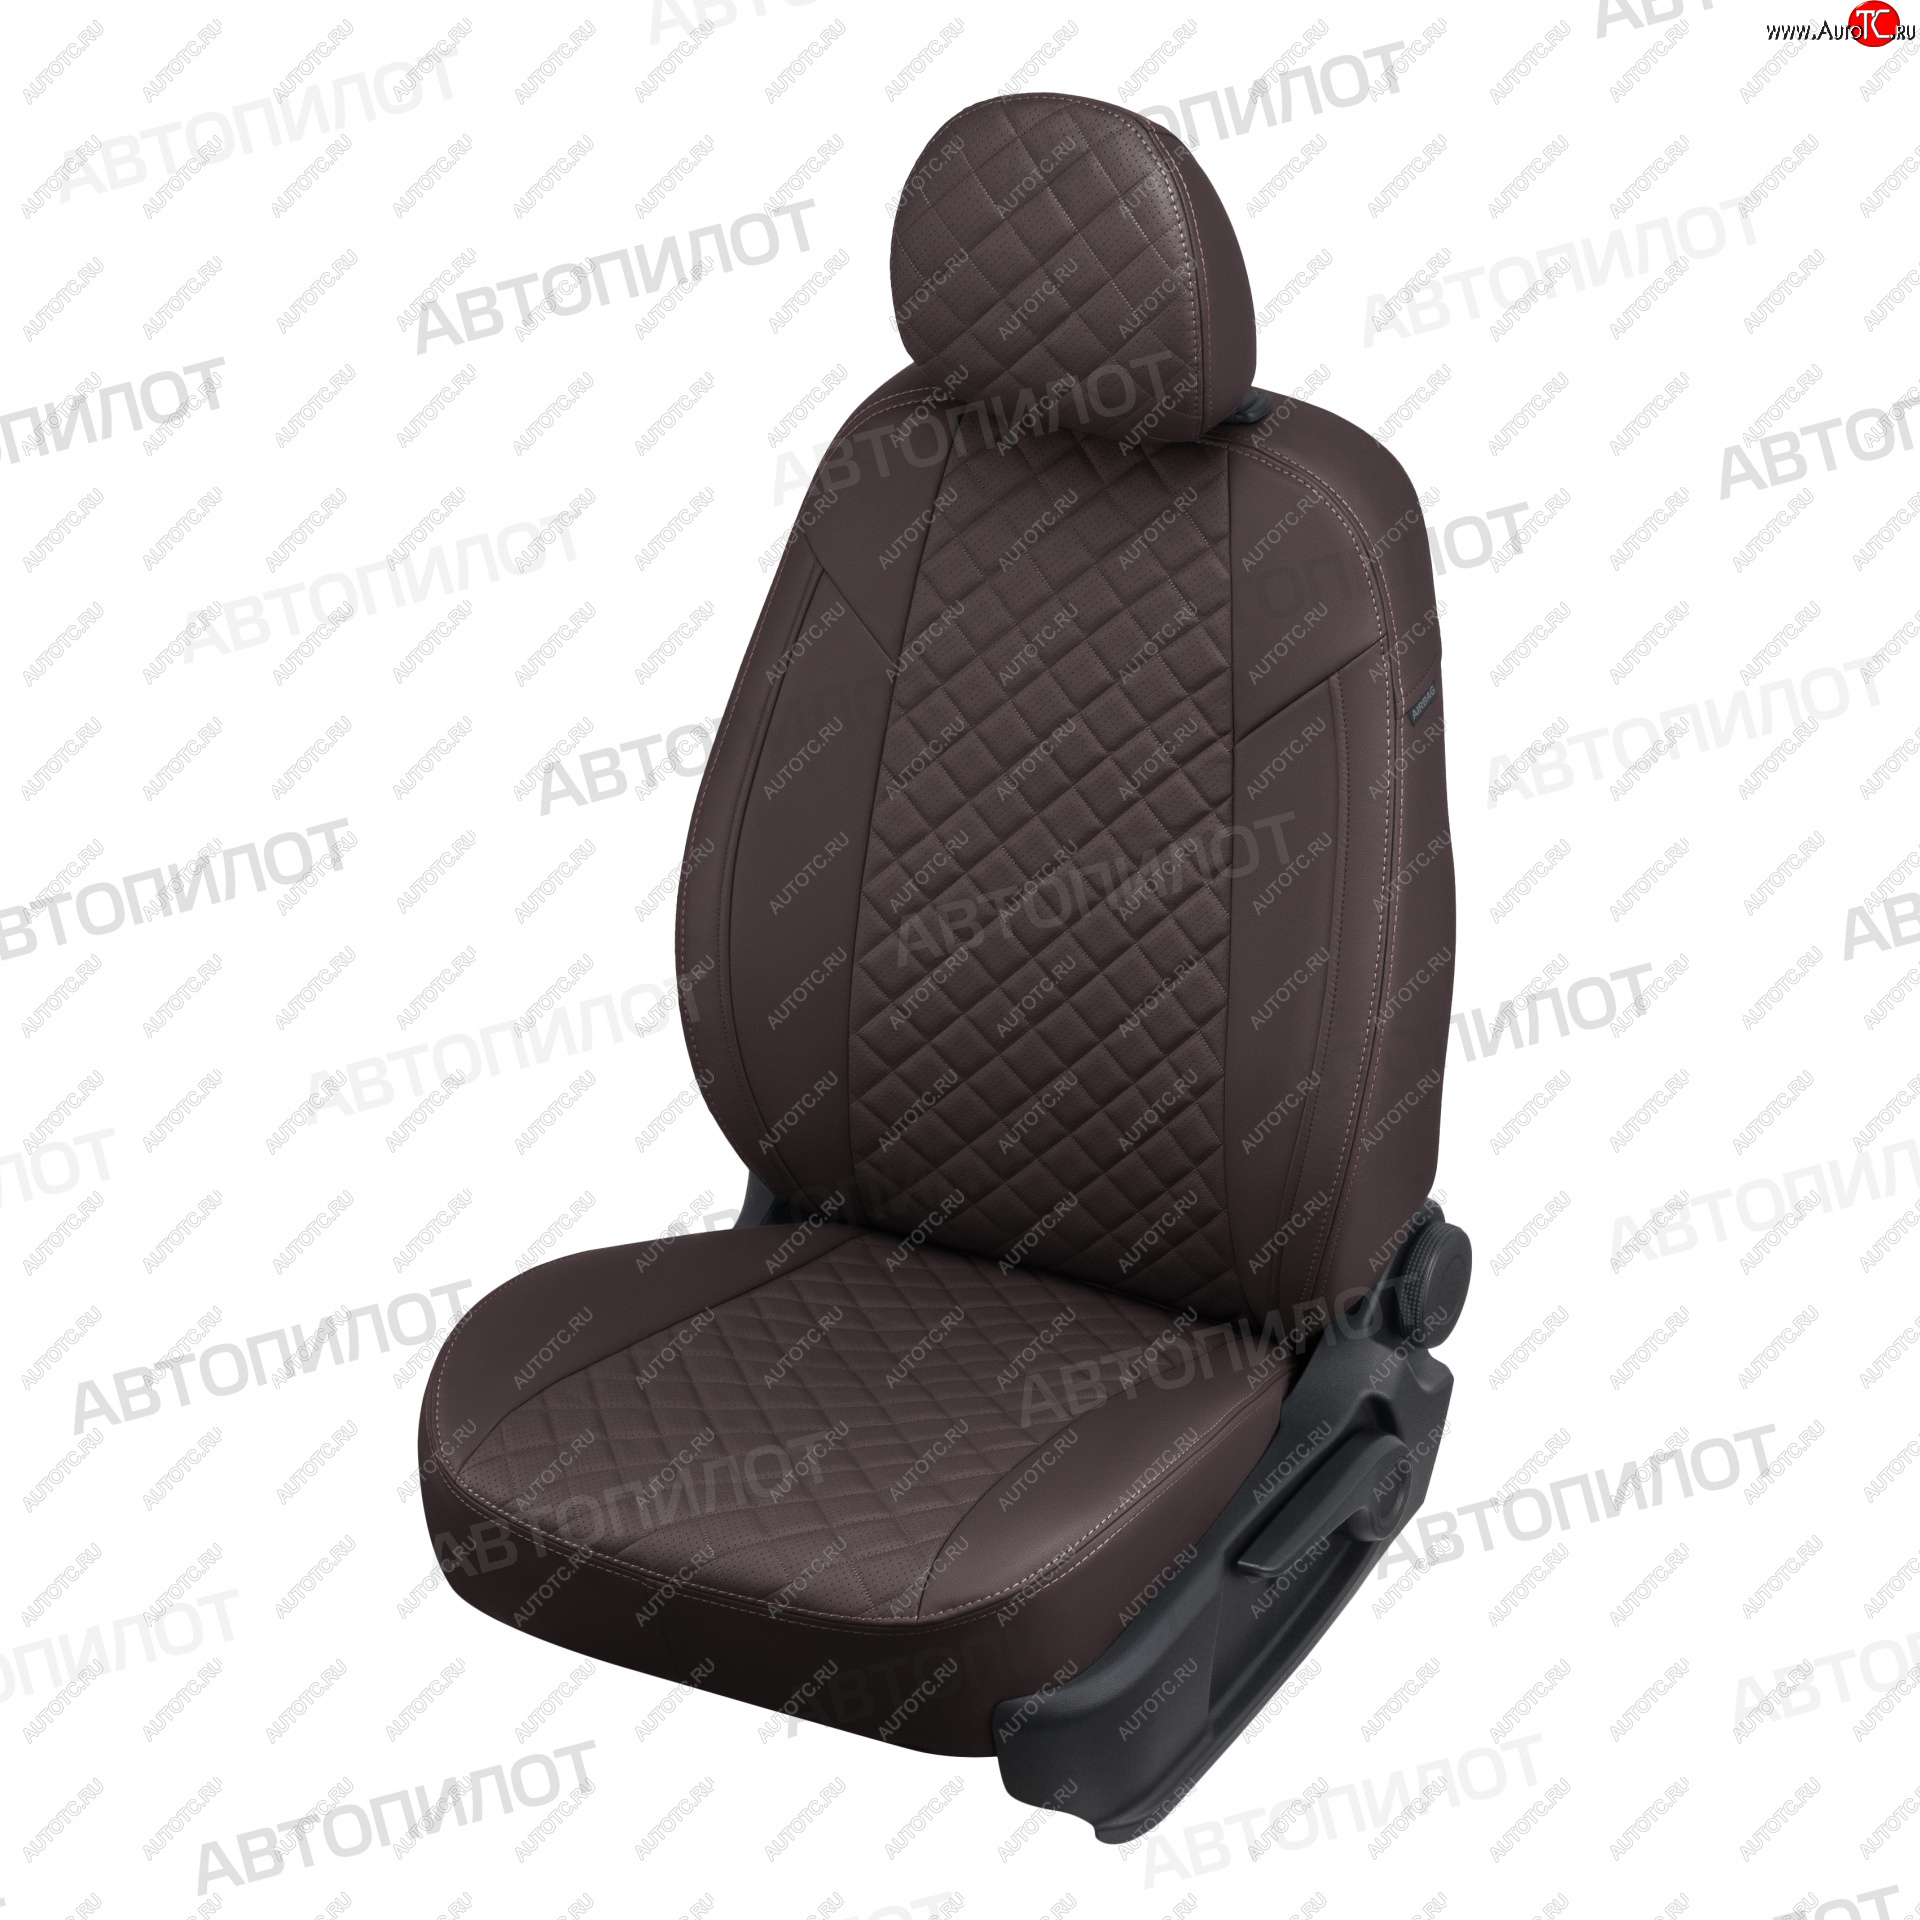 13 999 р. Чехлы сидений (экокожа, S-Line) Автопилот Ромб  Audi Q5  8R (2008-2017) (шоколад)